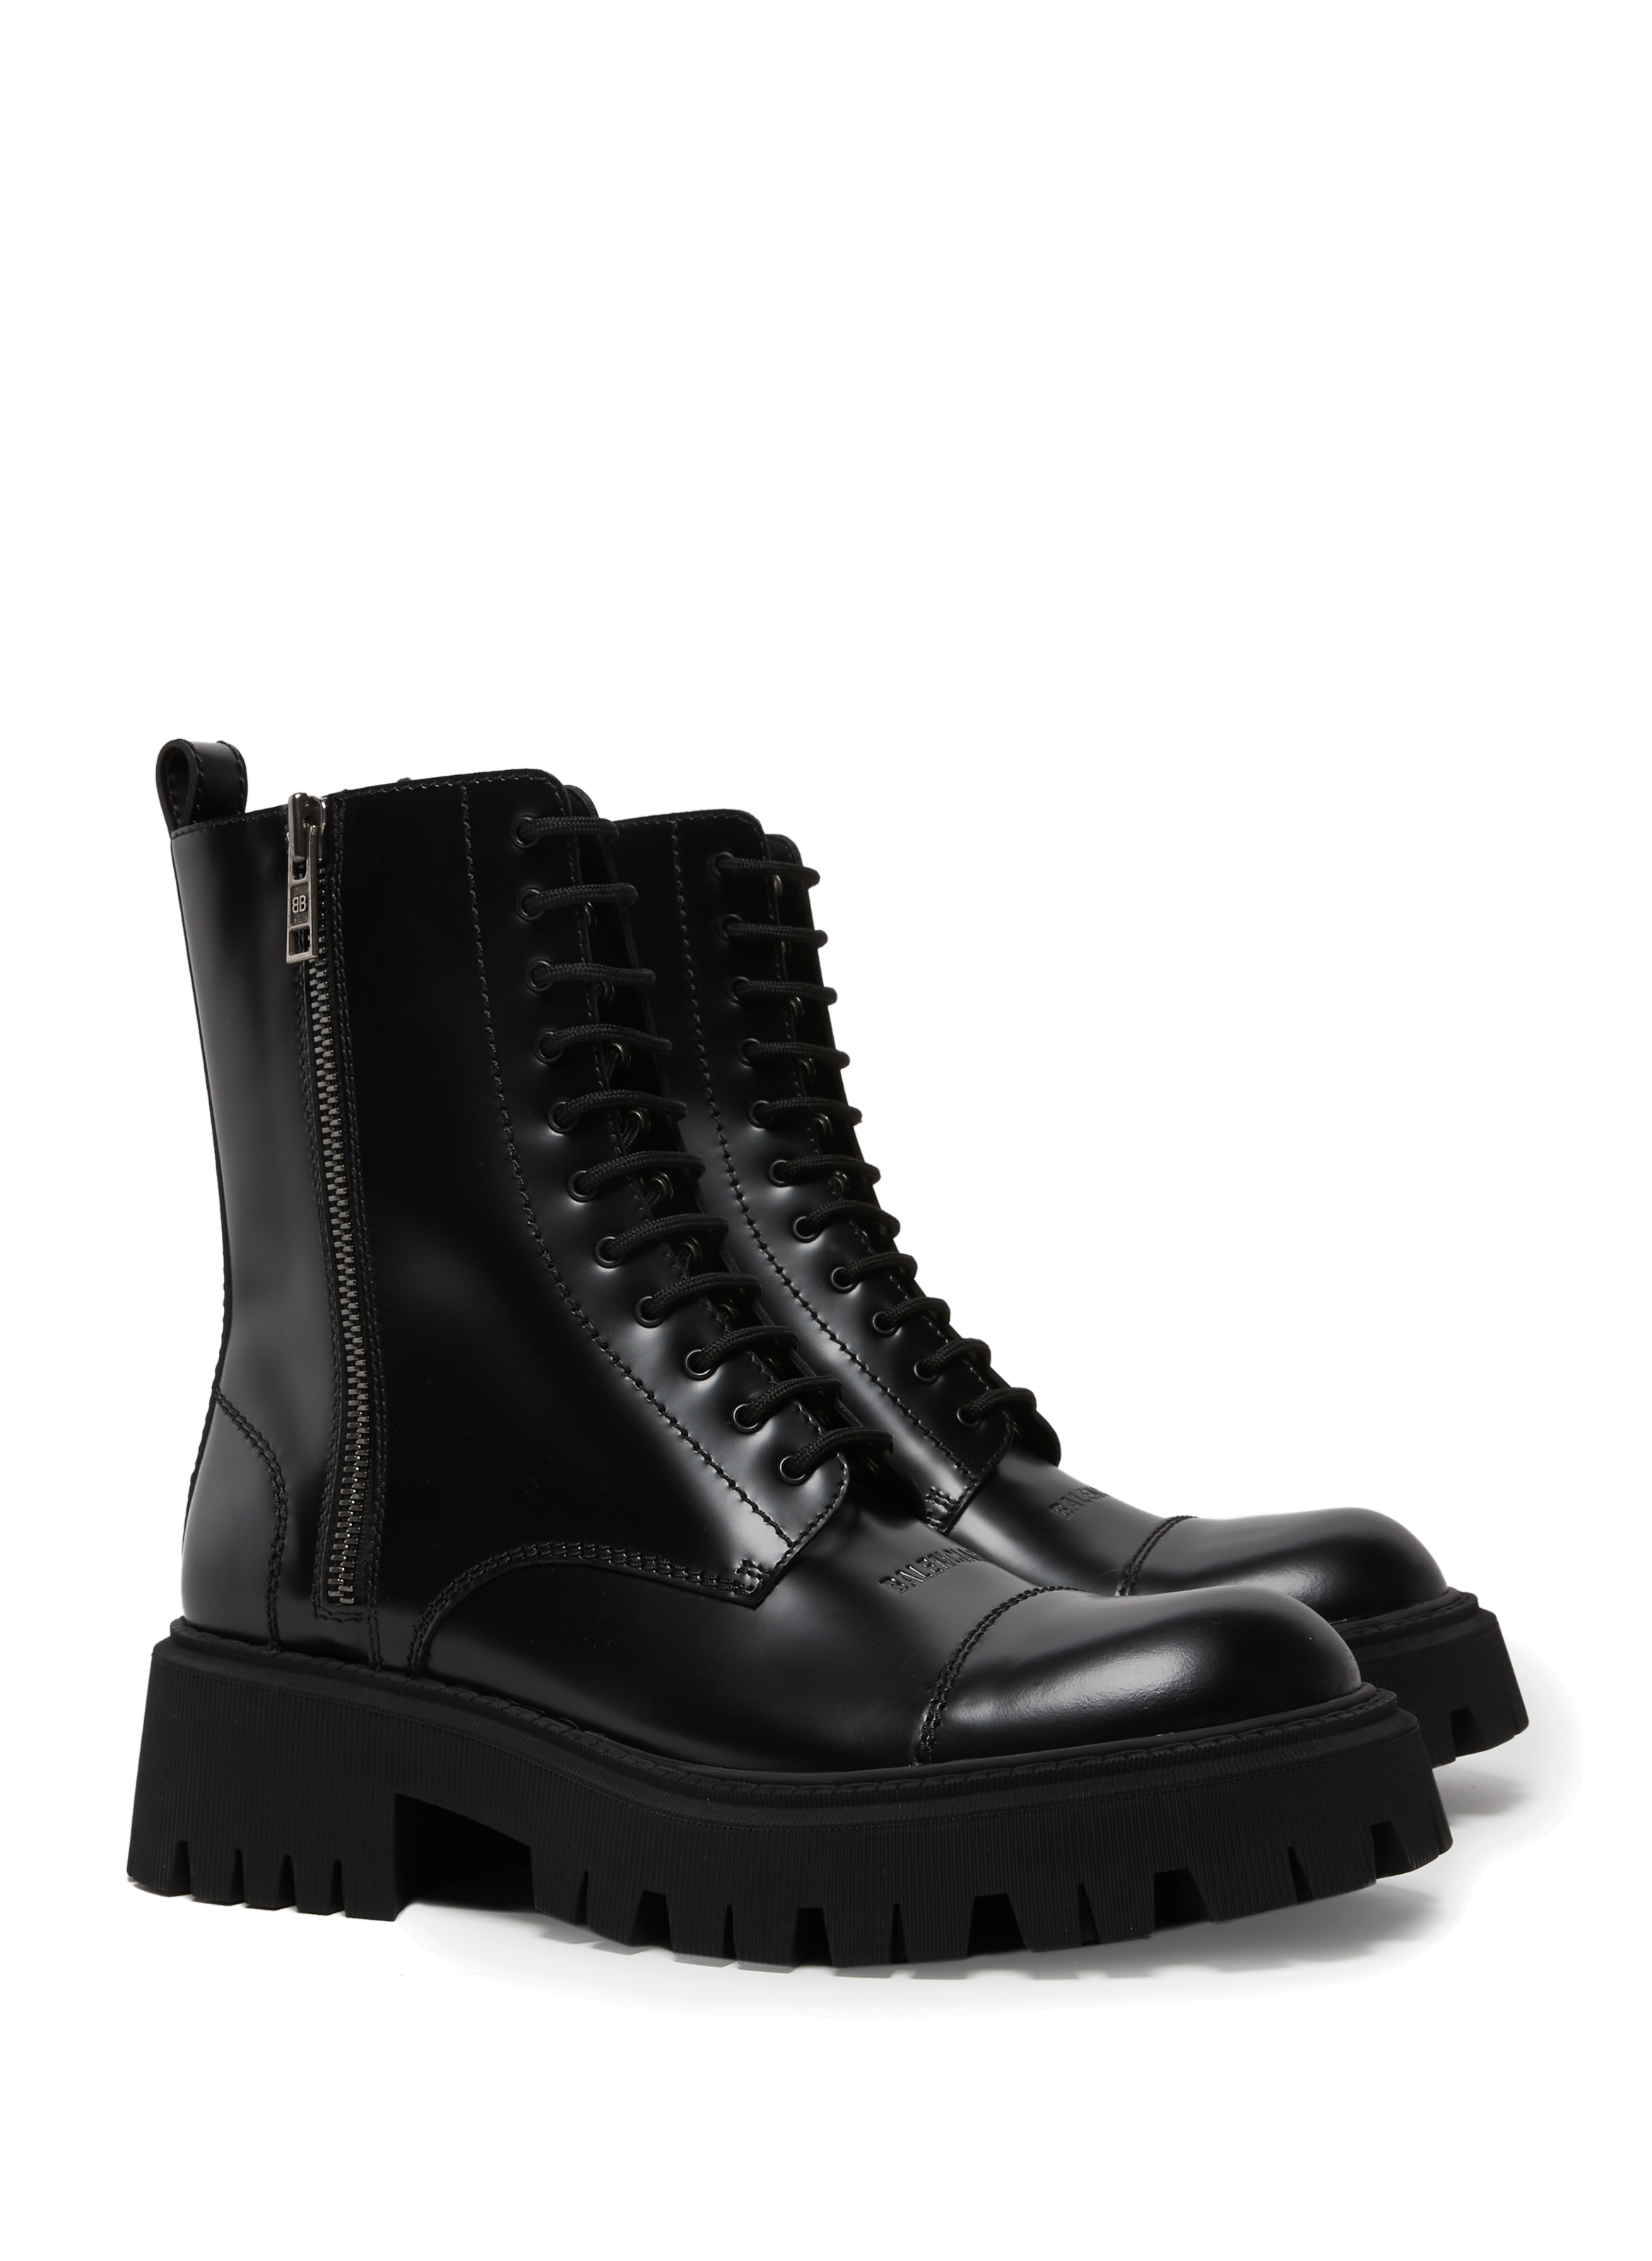 Strike leather boots Balenciaga Black size 44 EU in Leather  24720549